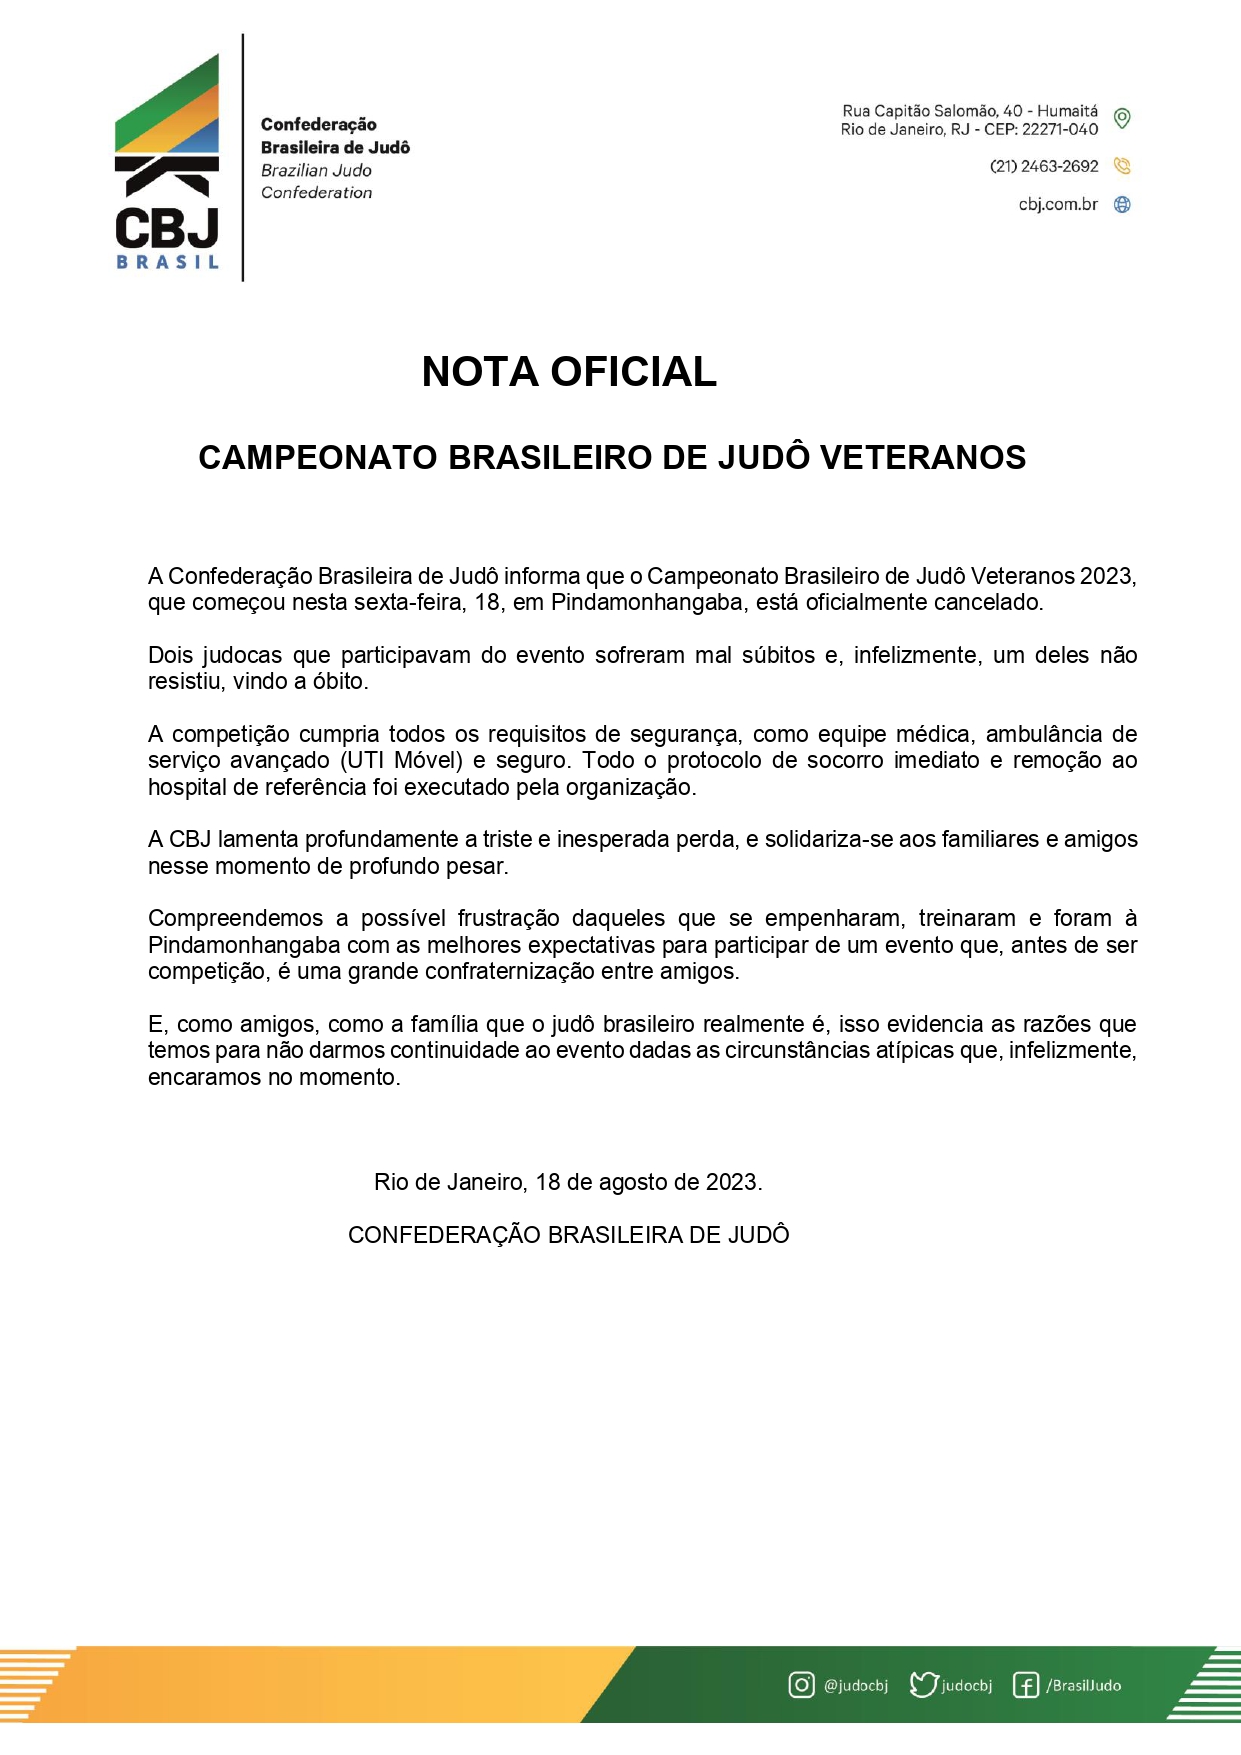 CBJ Comunicado: Nota oficial sobre brasileiro veteranos.